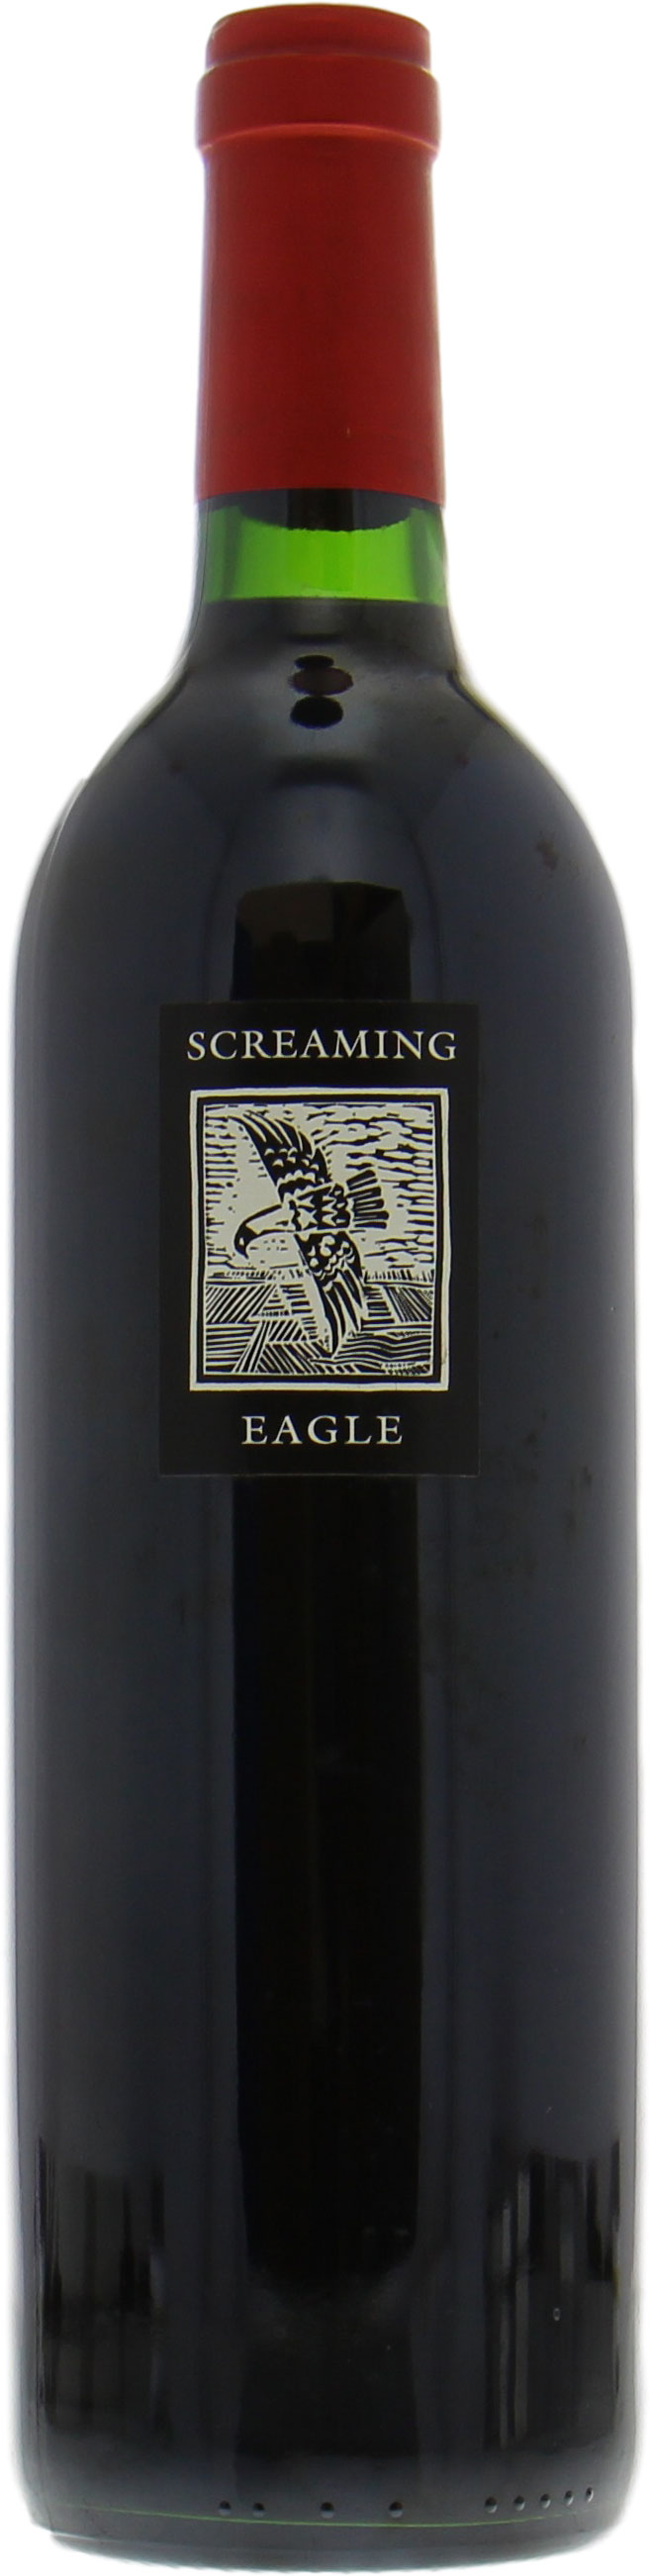 Screaming Eagle - Cabernet Sauvignon 2007 Perfect